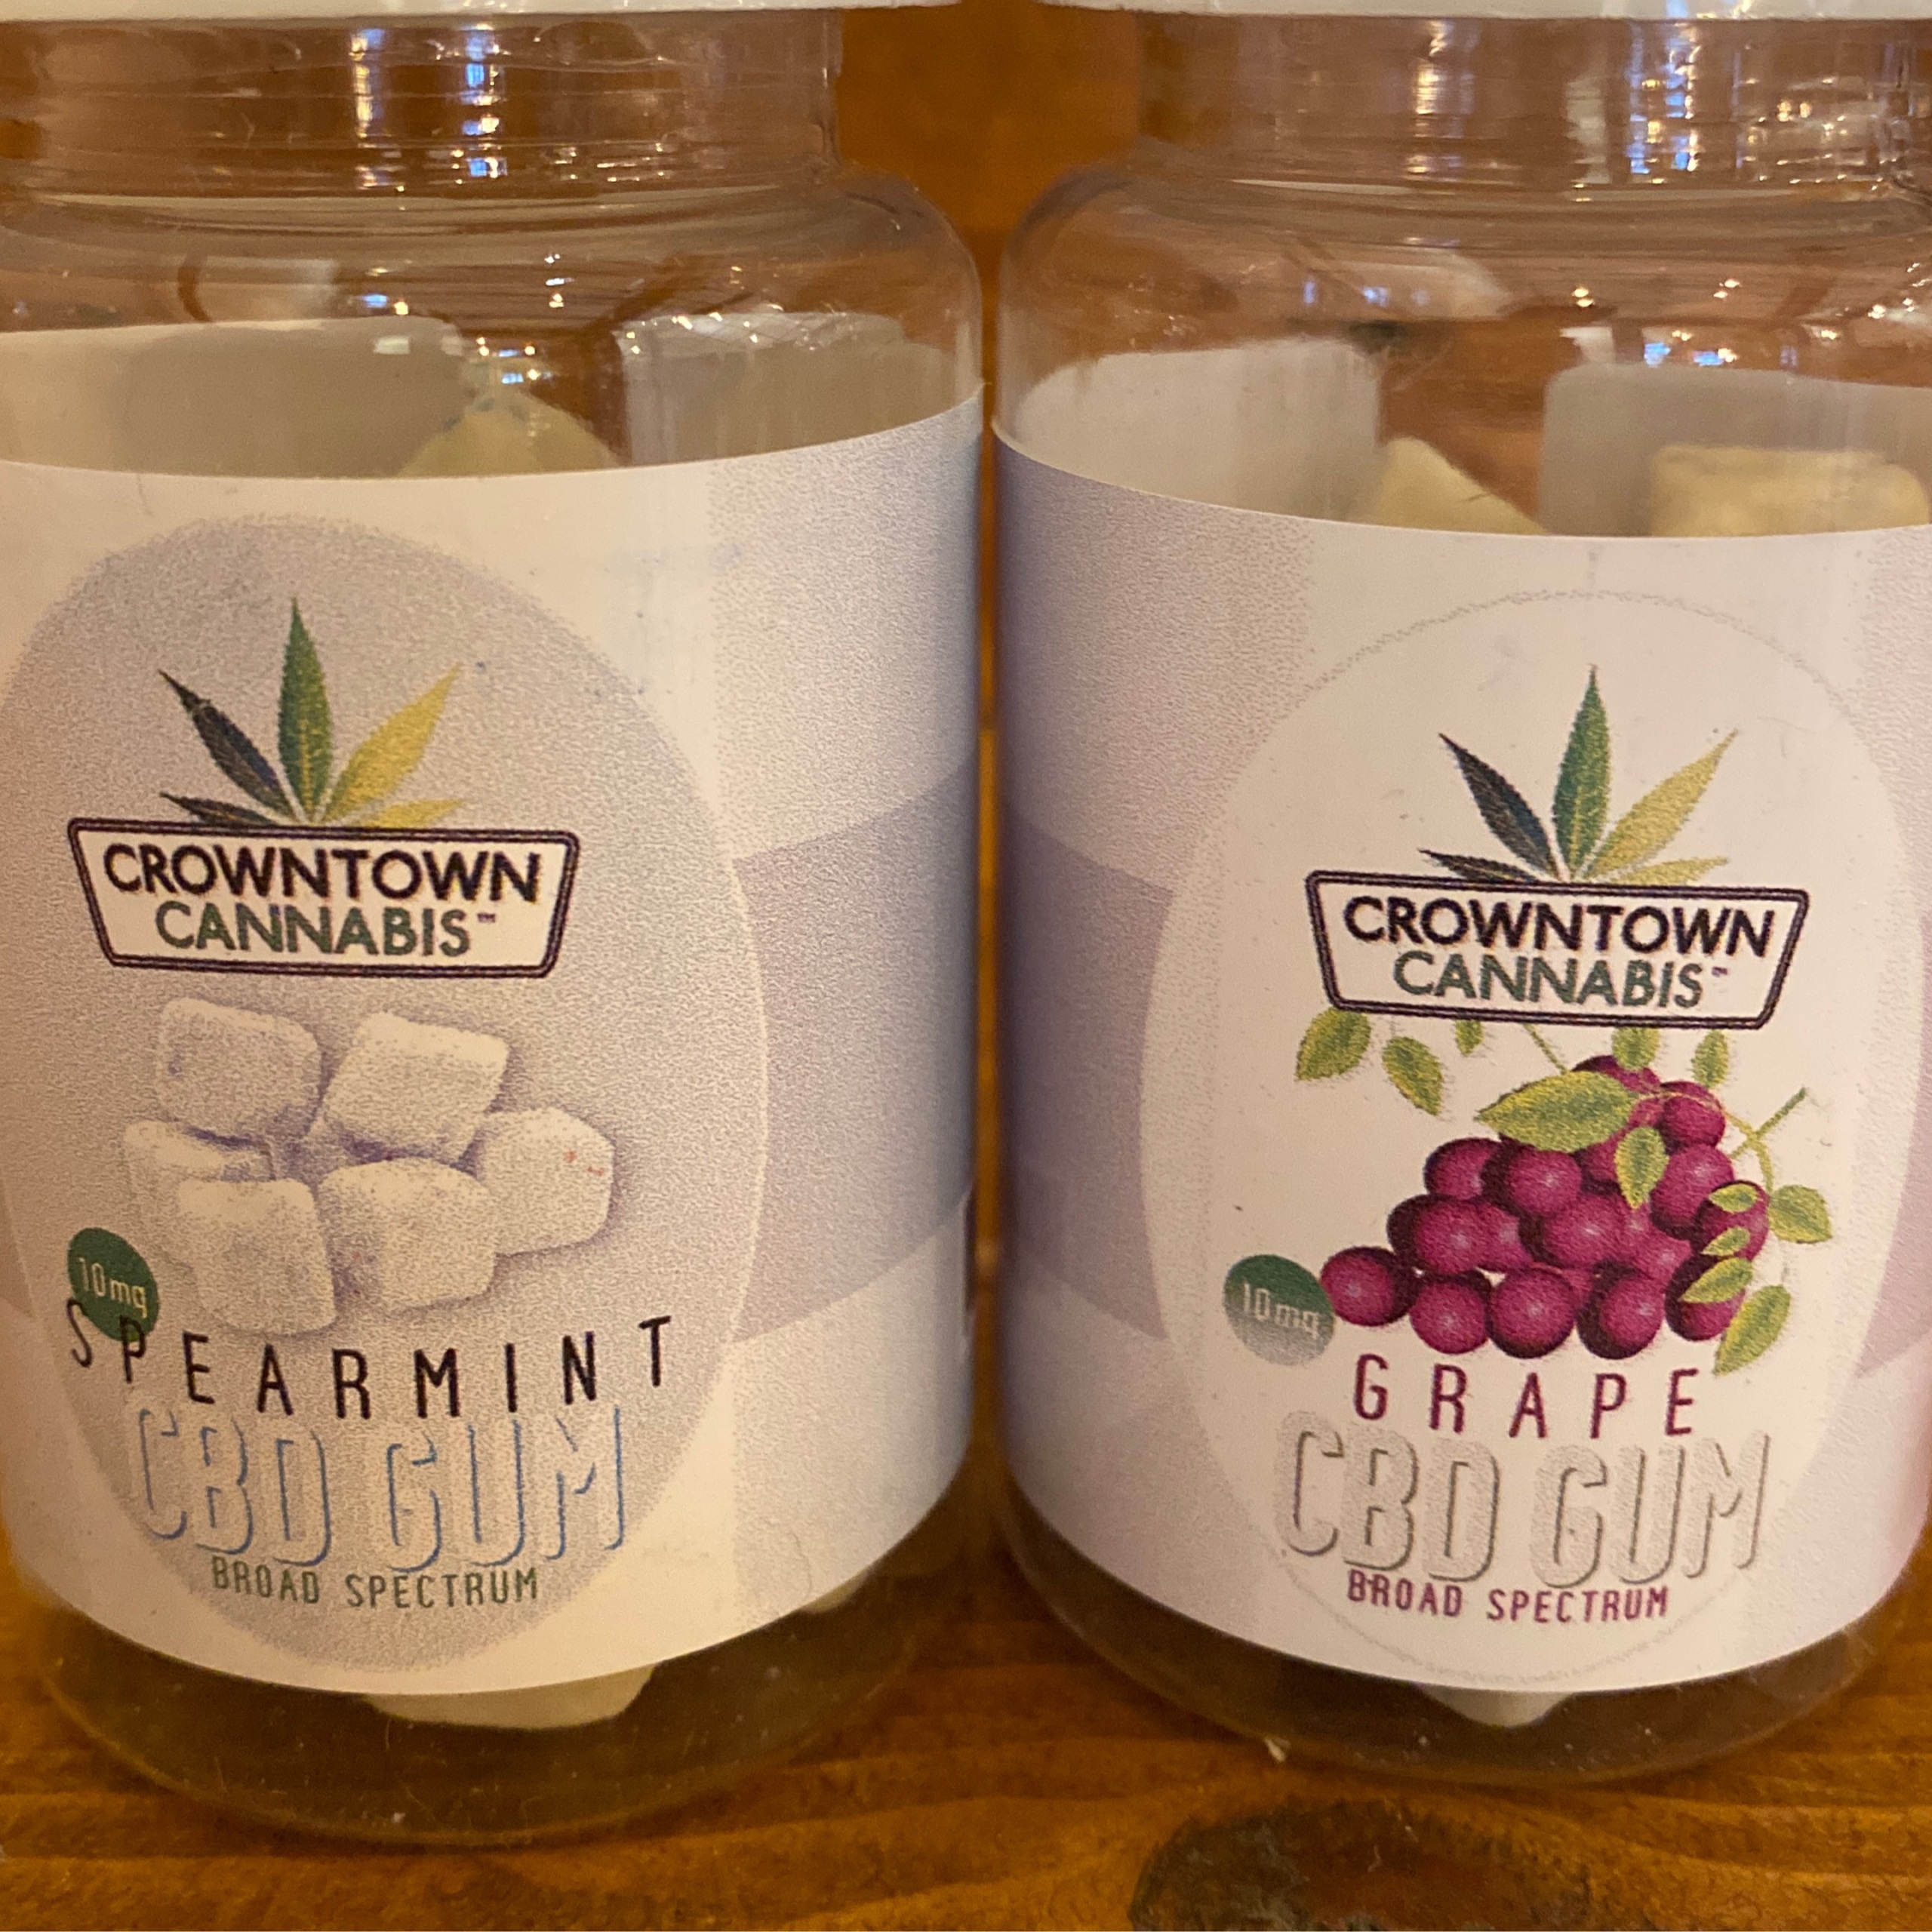 Crowntown CBD Gum